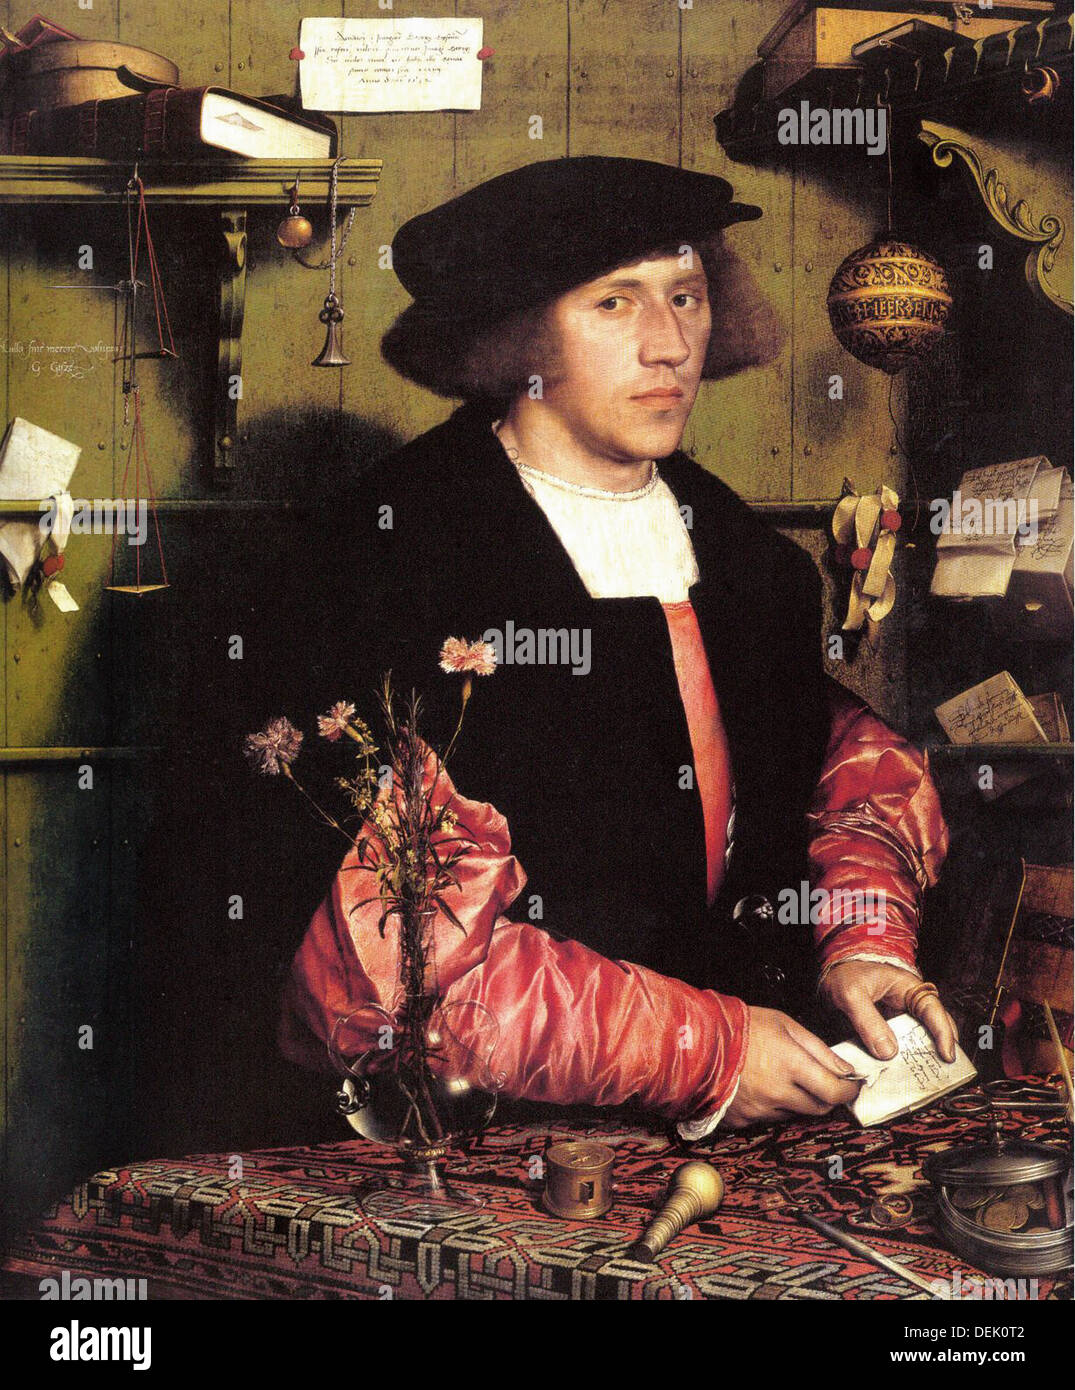 Hans Holbein - The Merchant Georg Gisze - 1532 - Gemaldegalerie - Berlin Stock Photo